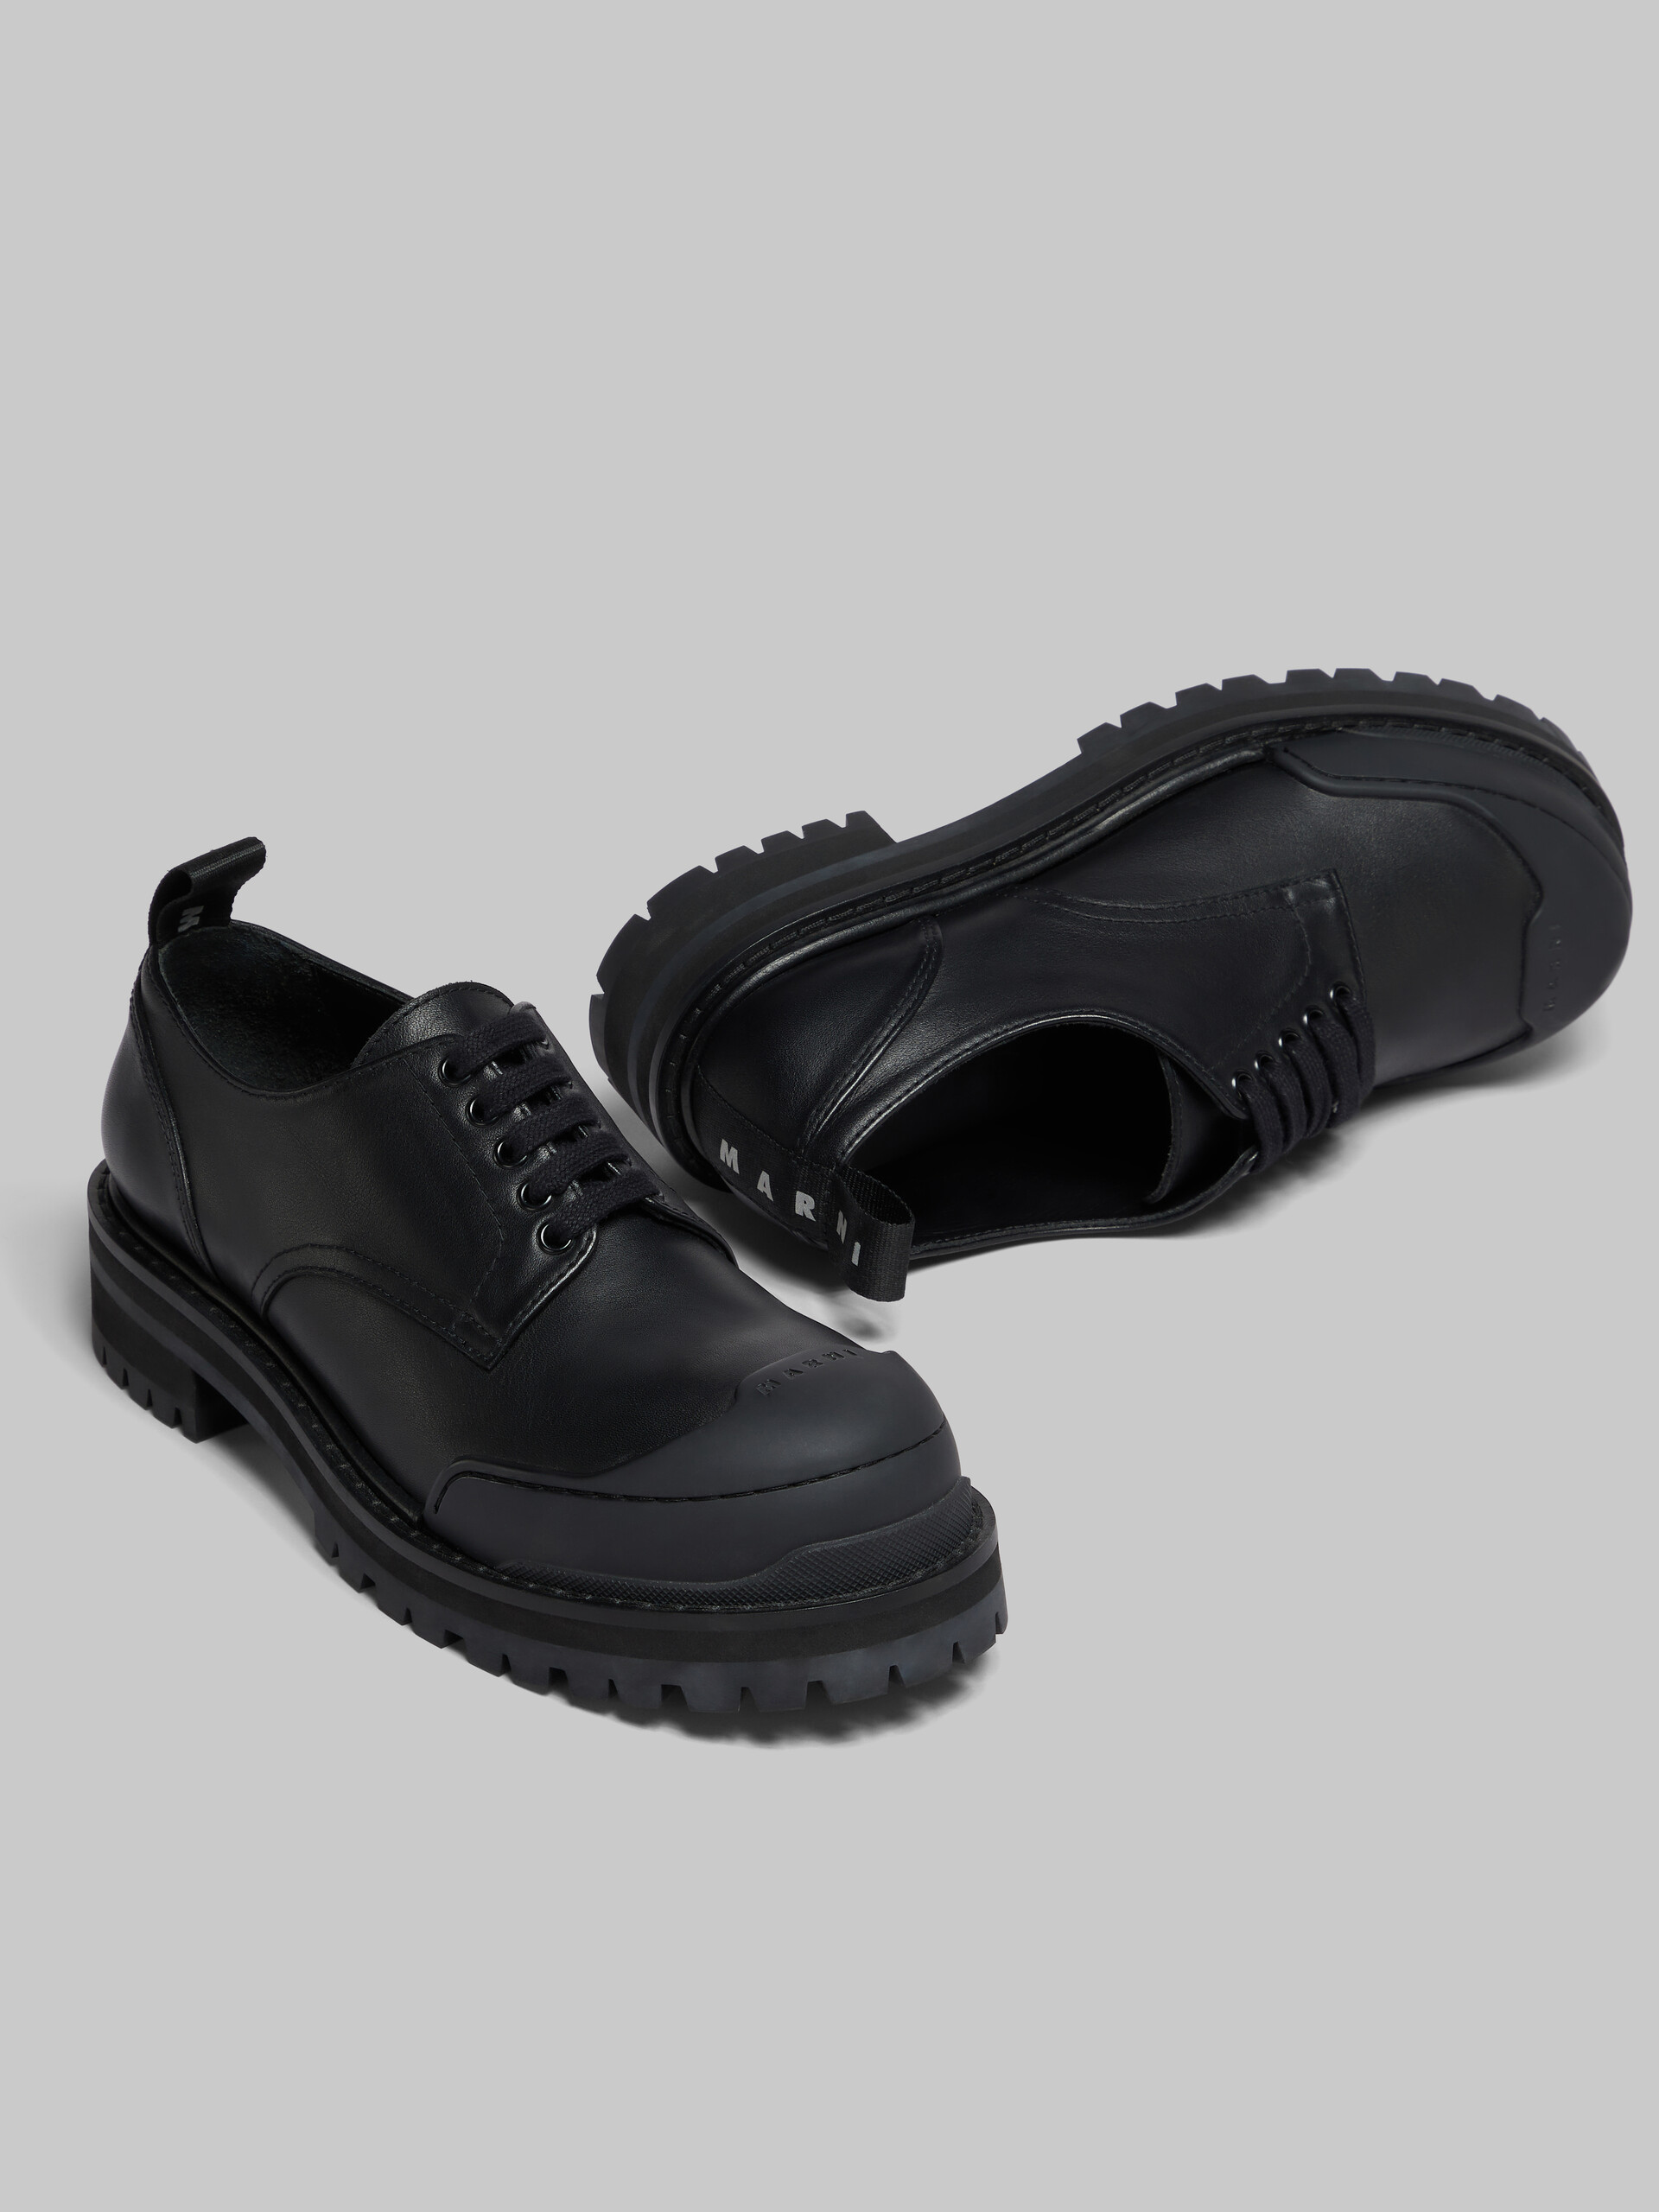 Chaussures derby Dada Army en cuir noir - Chaussures à Lacets - Image 4